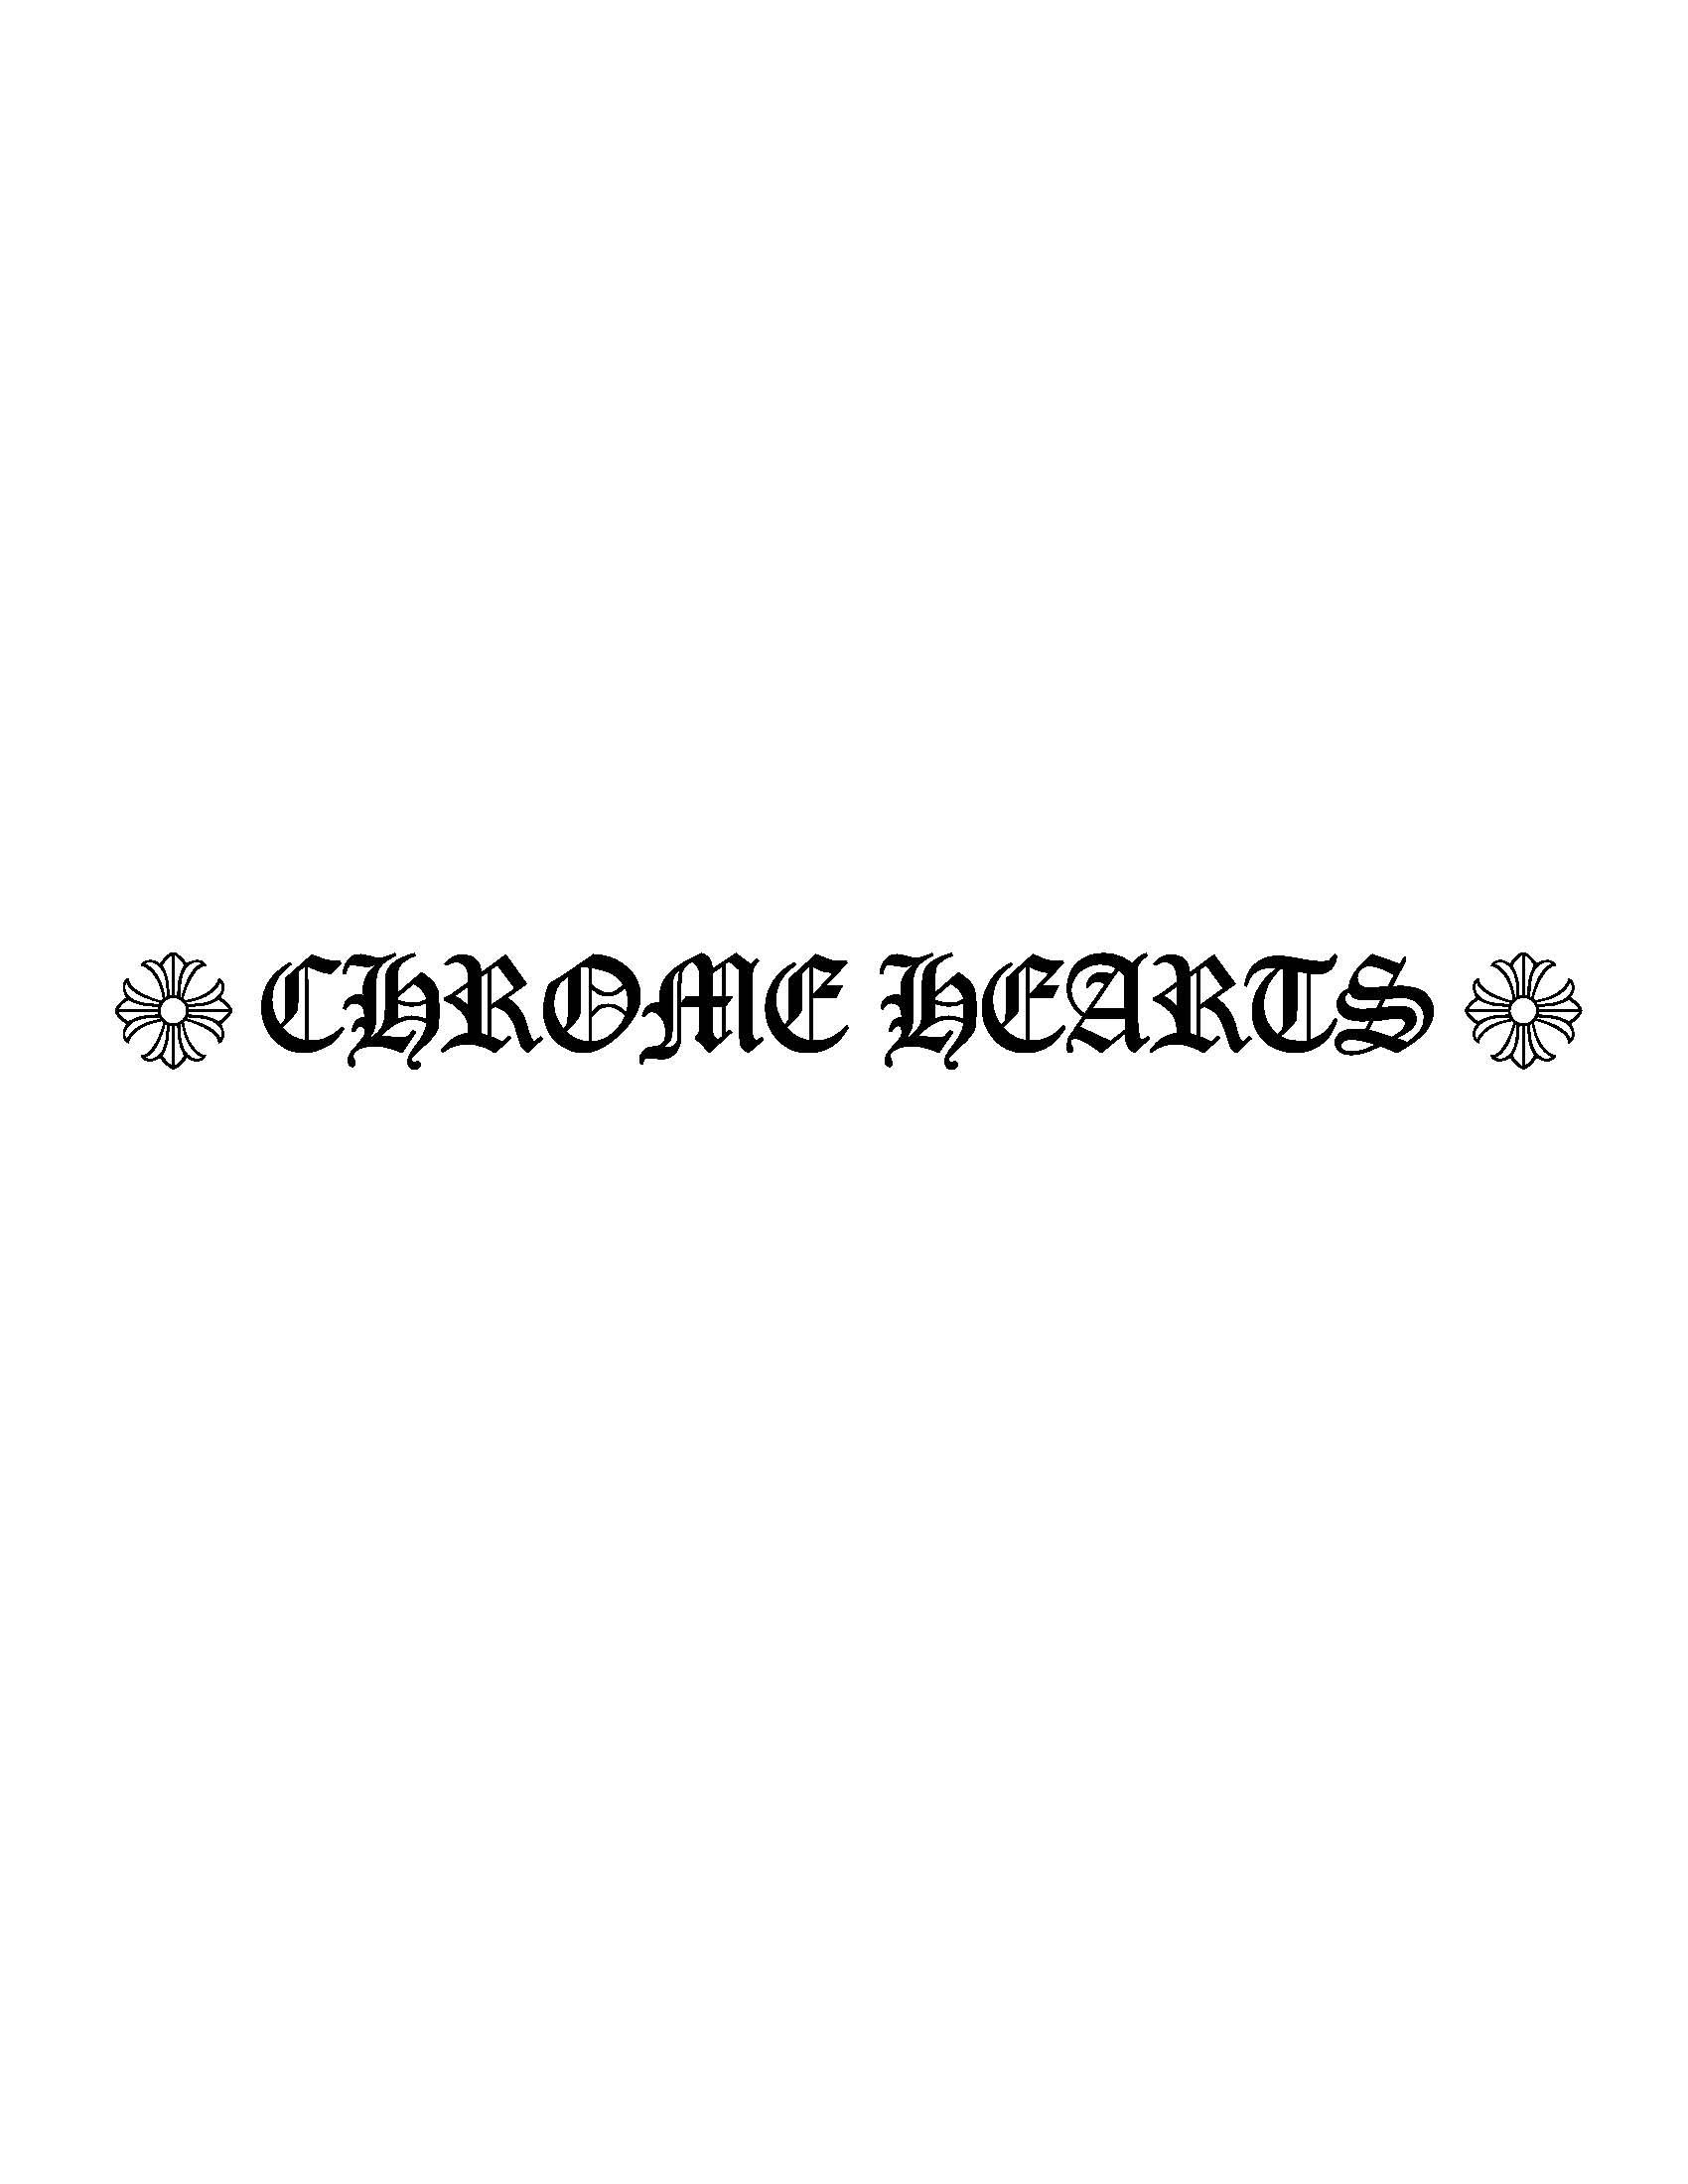 CHROME HEARTS - Chrome Hearts LLC Trademark Registration